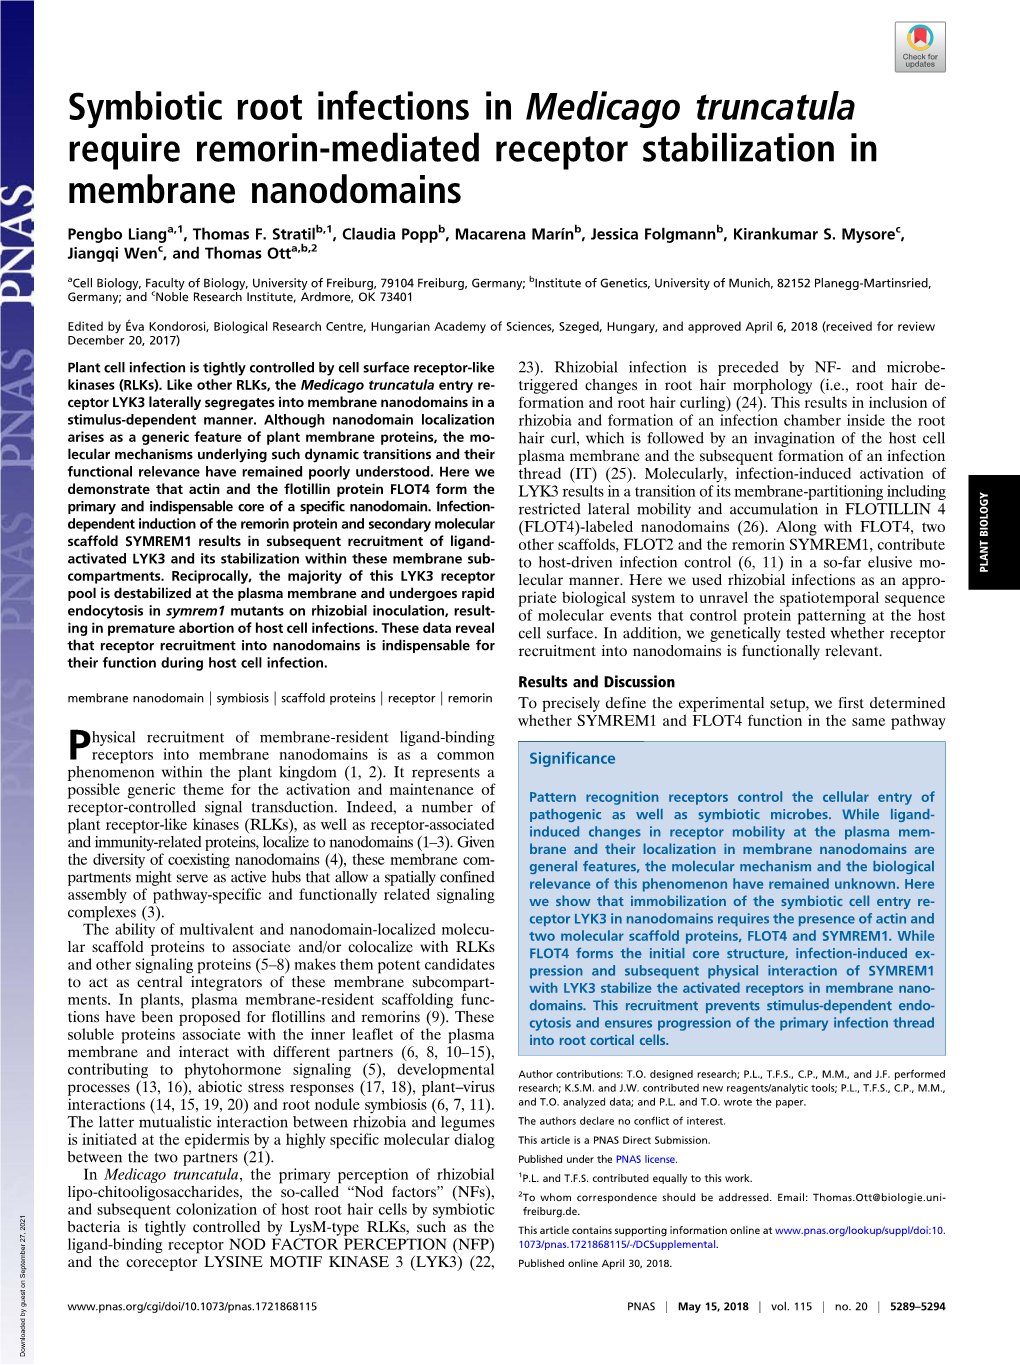 Symbiotic Root Infections in Medicago Truncatula Require Remorin-Mediated Receptor Stabilization in Membrane Nanodomains